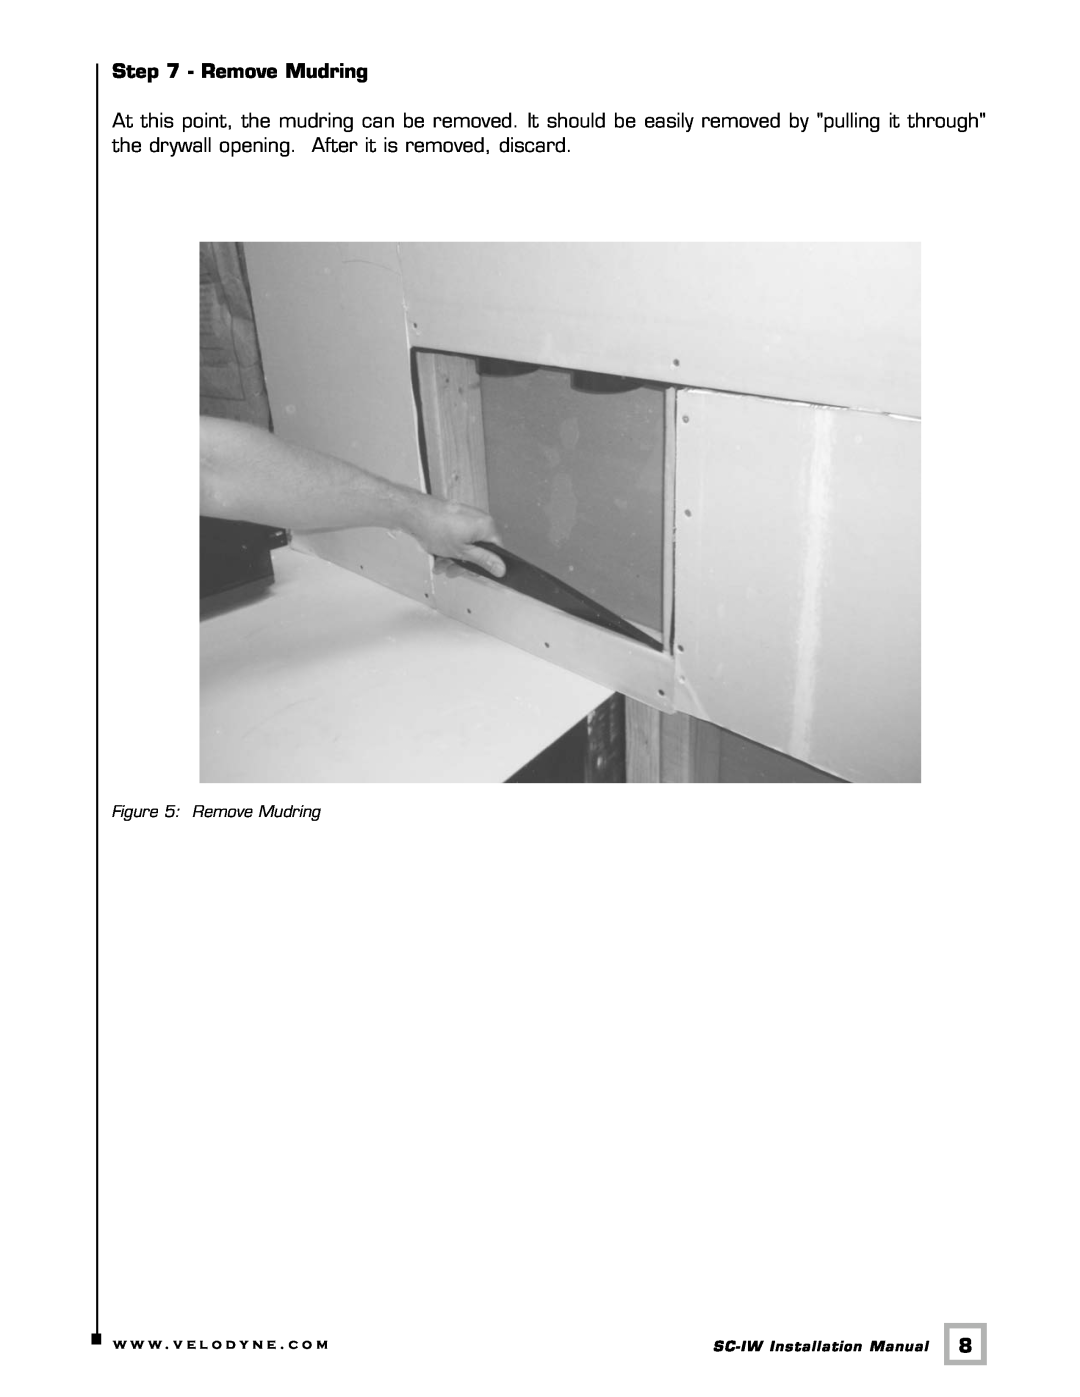 Velodyne Acoustics installation manual Remove Mudring, w w w . v e l o d y n e . c o m, SC-IWInstallation Manual 